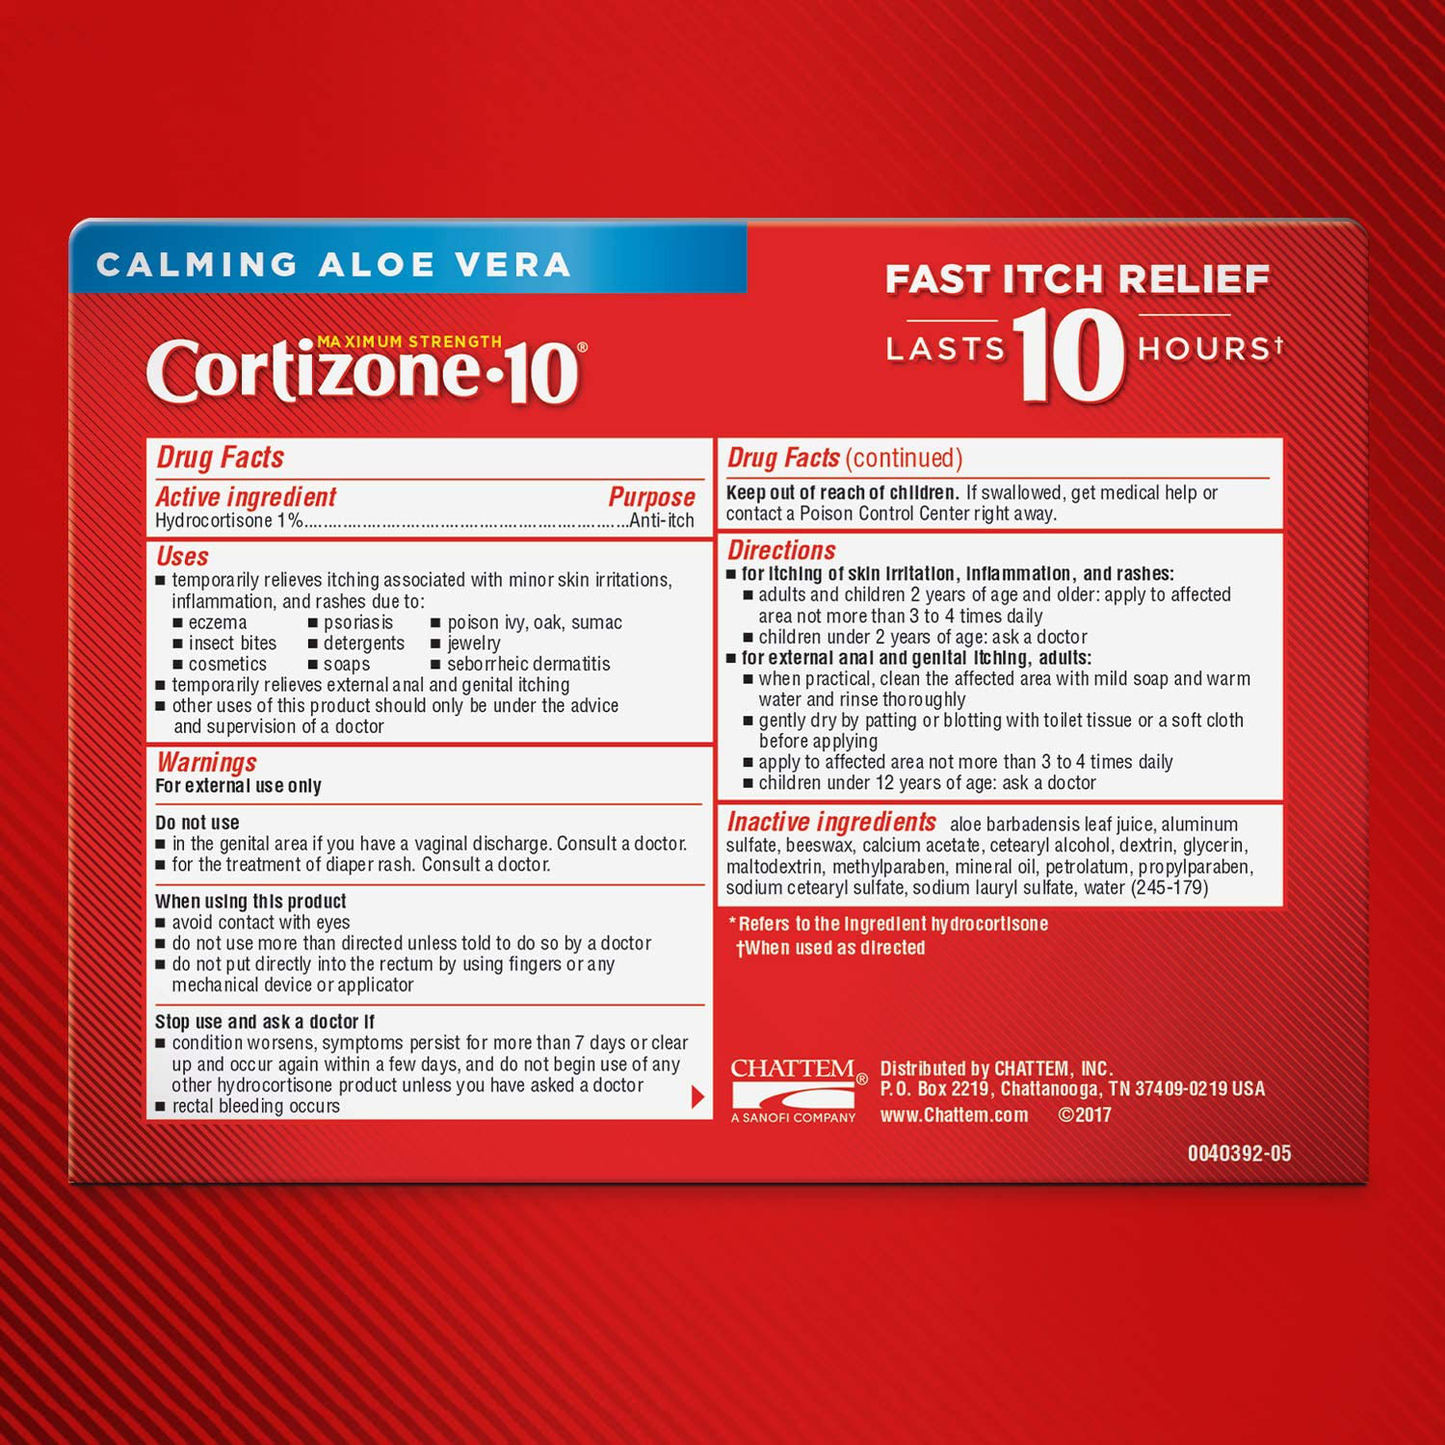 Cortizone-10 Maximum Strength, 2 Ounce Box